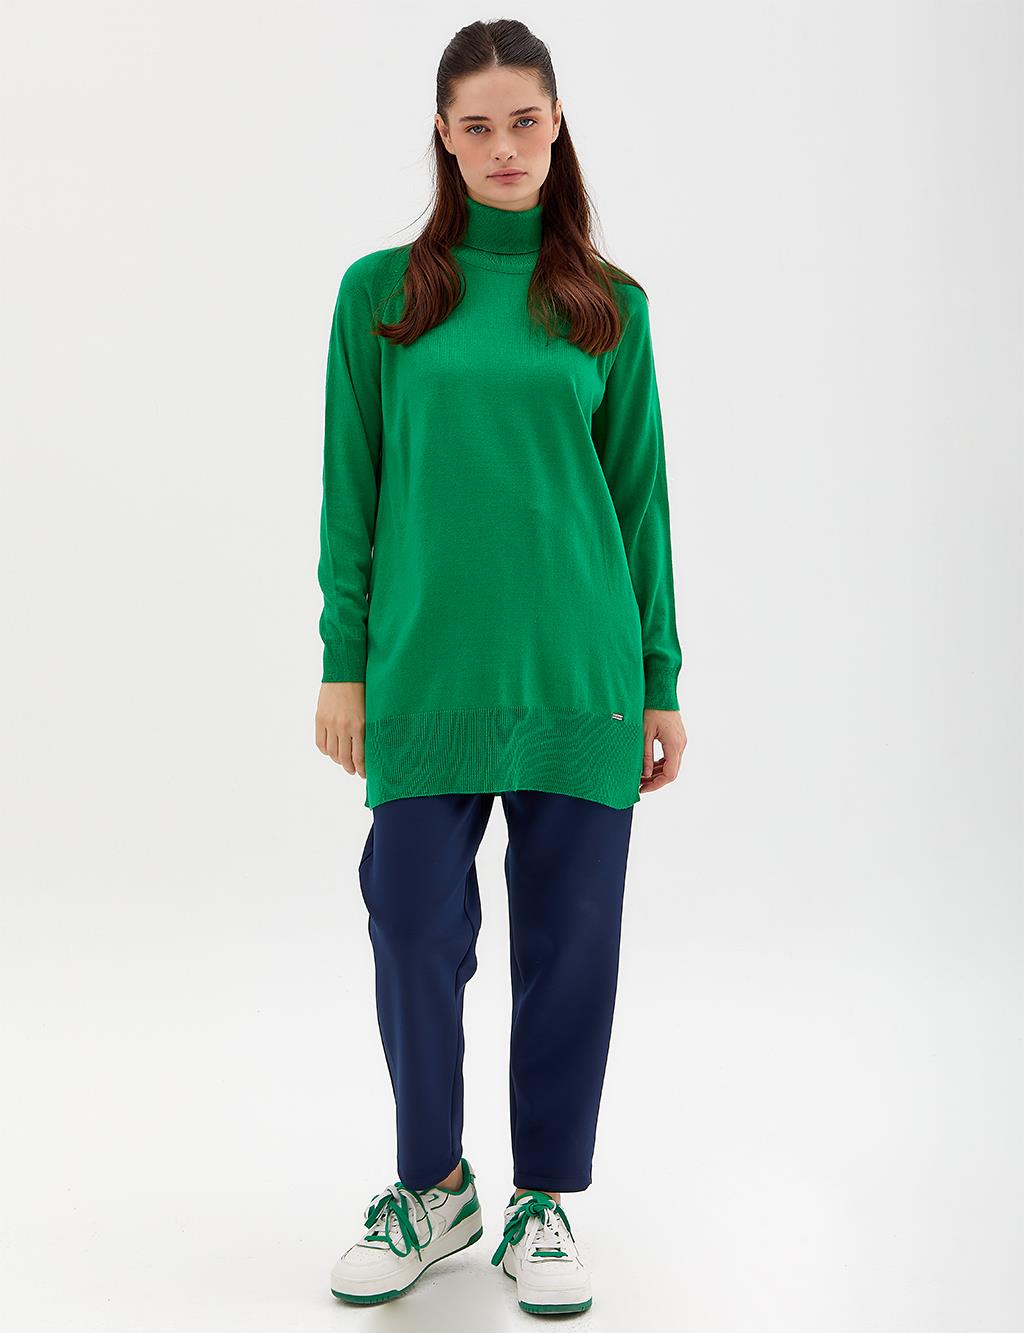 Half Turtleneck Knitwear Tunic Green